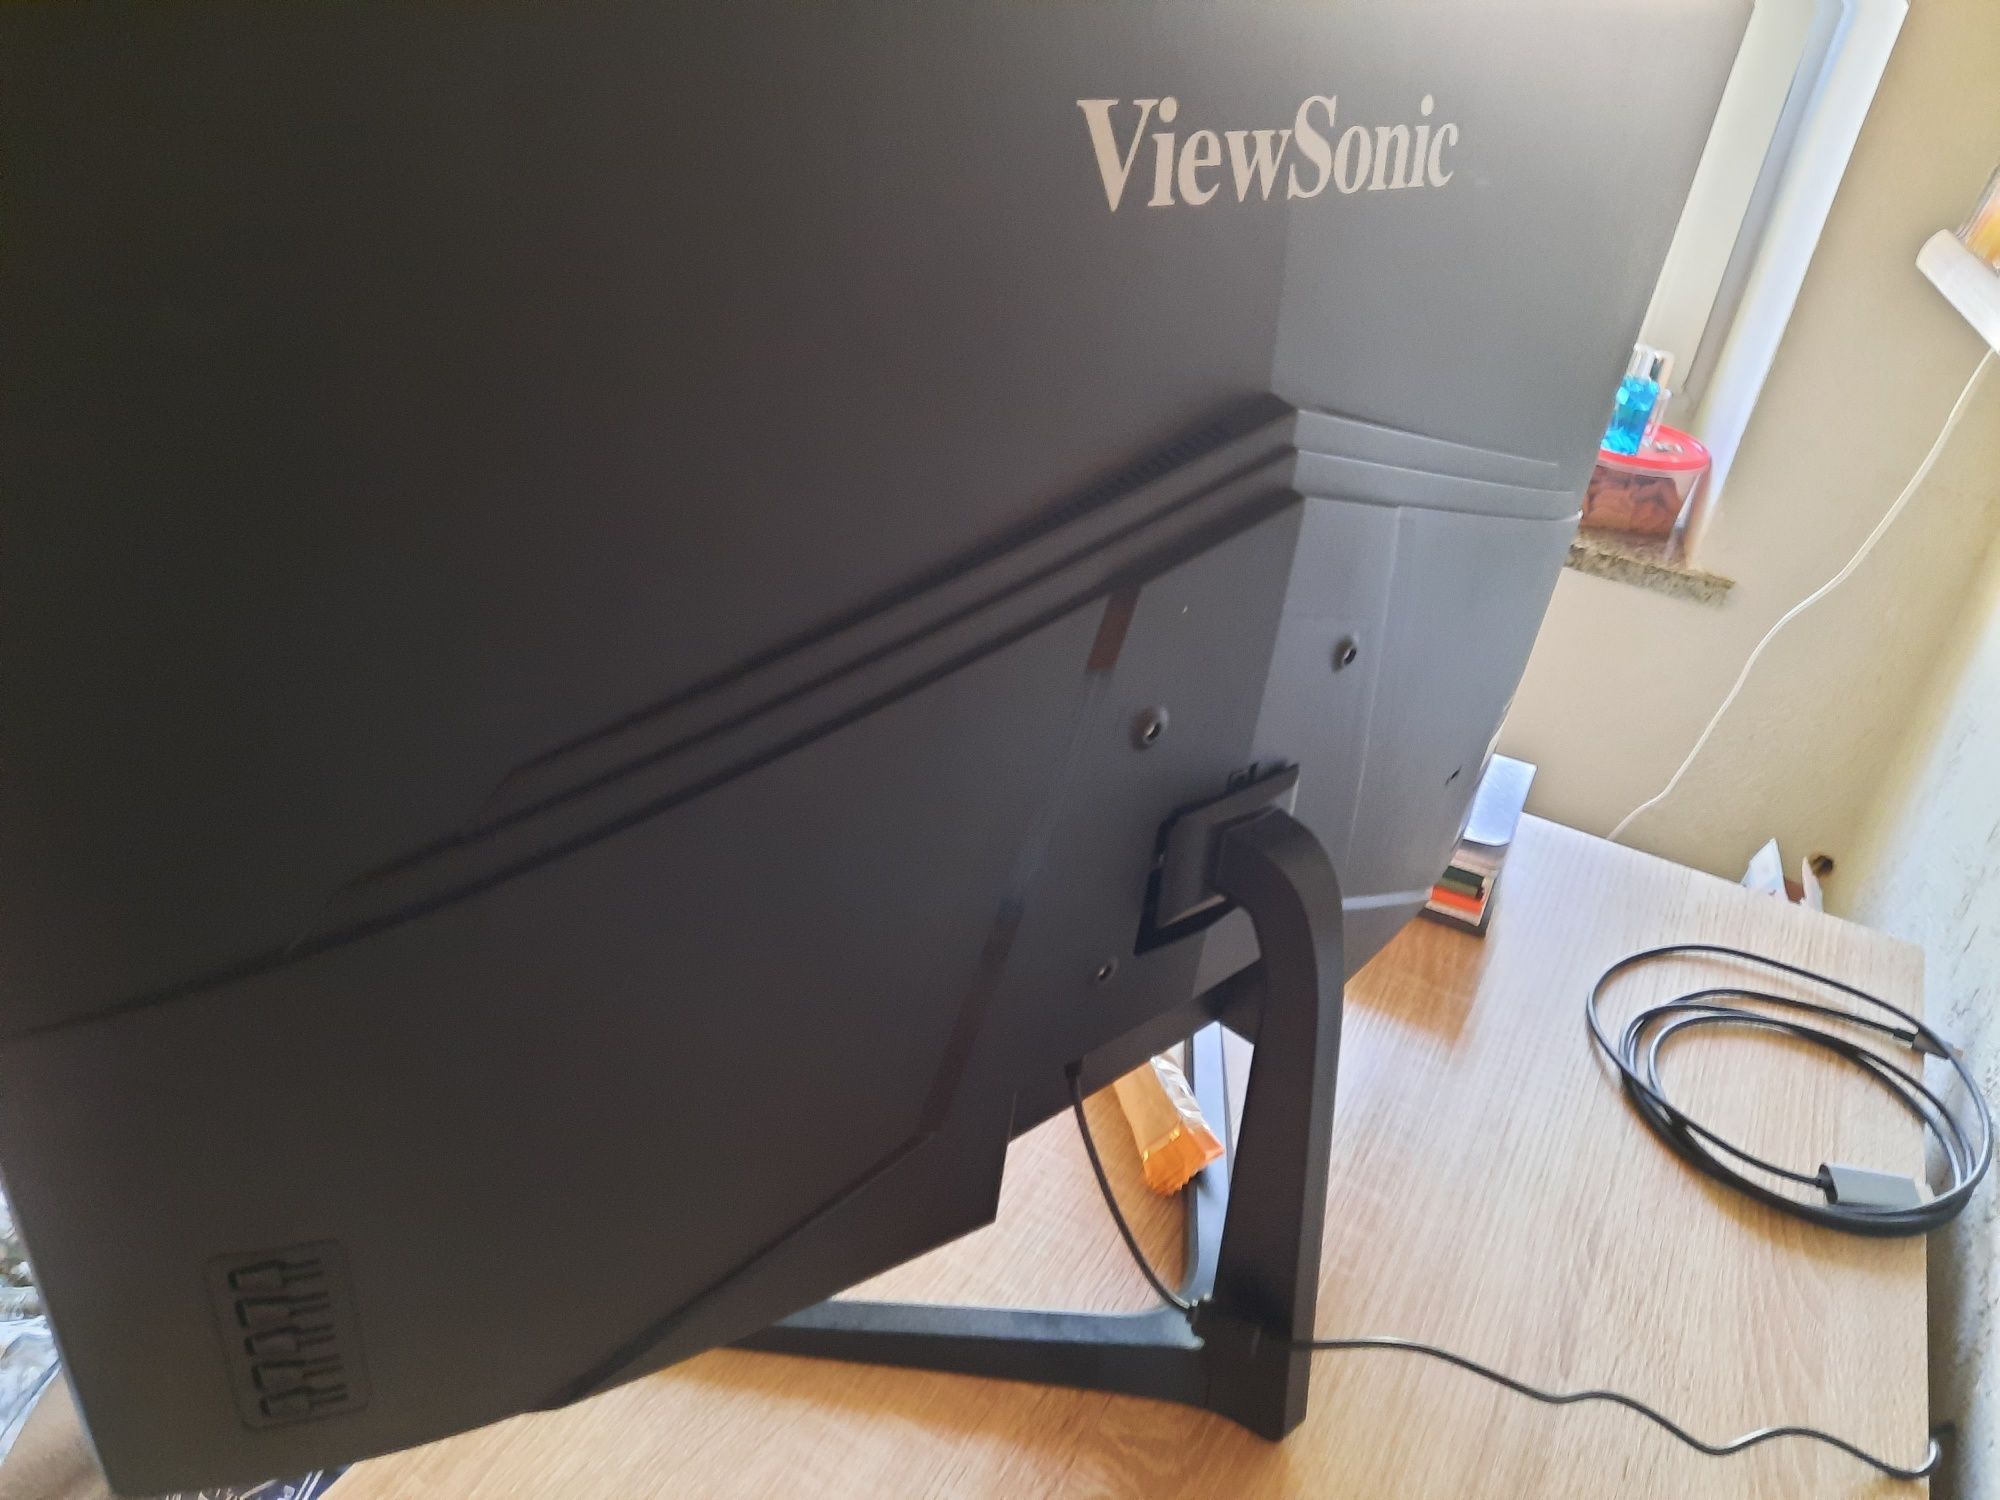 Monitor viewsonic VX3219-PC-mhd